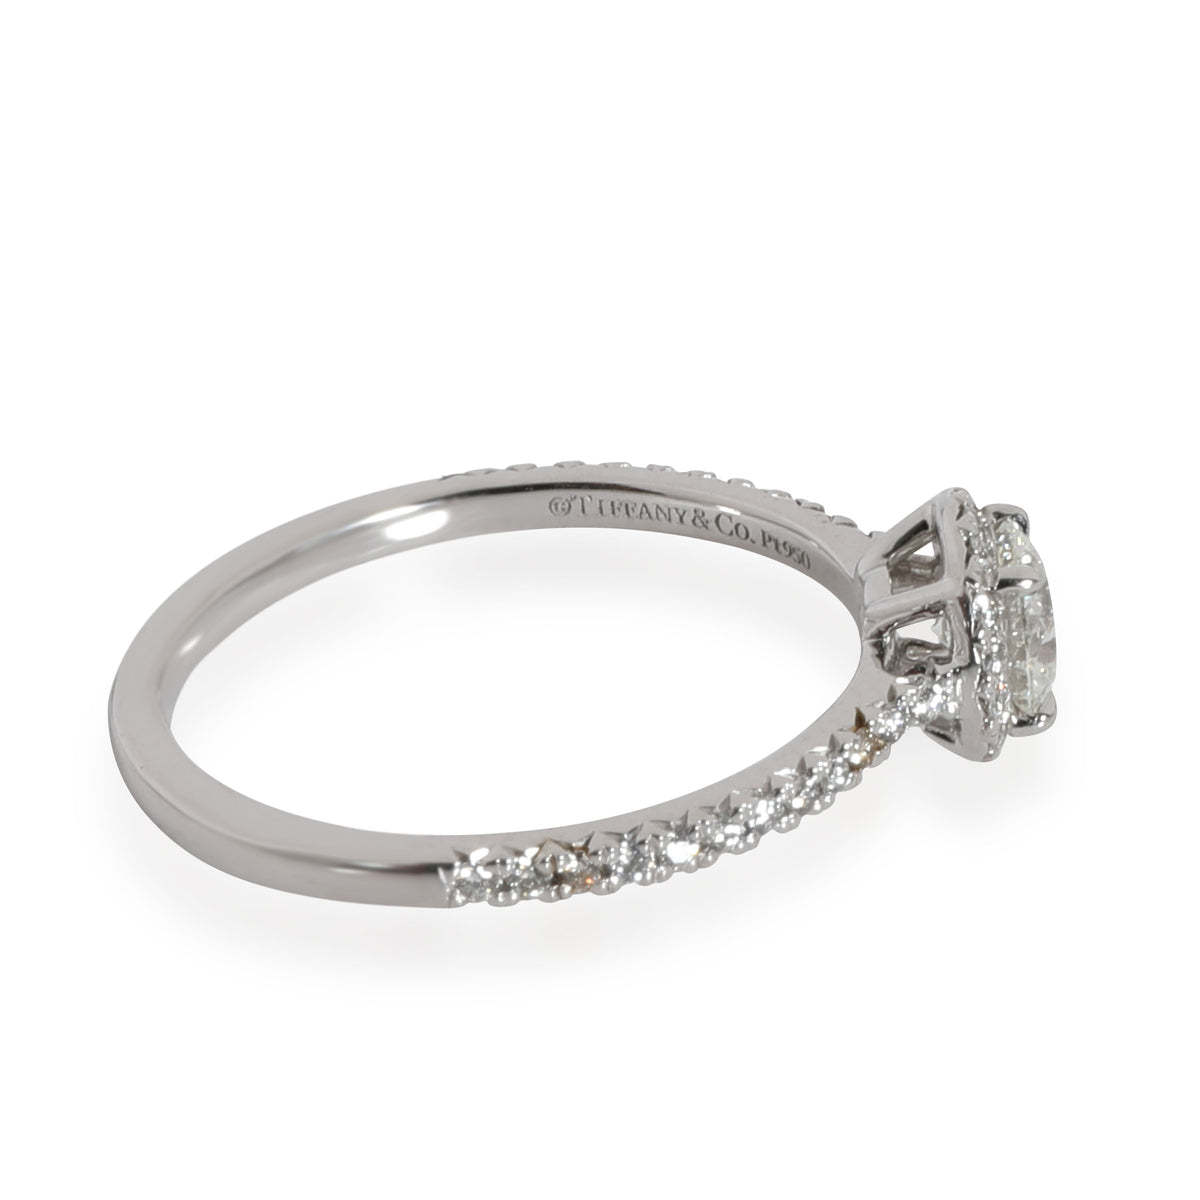 Tiffany & Co. Soleste Halo Diamond Engagement Ring in  Platinum H VVS1 0.55 CTW